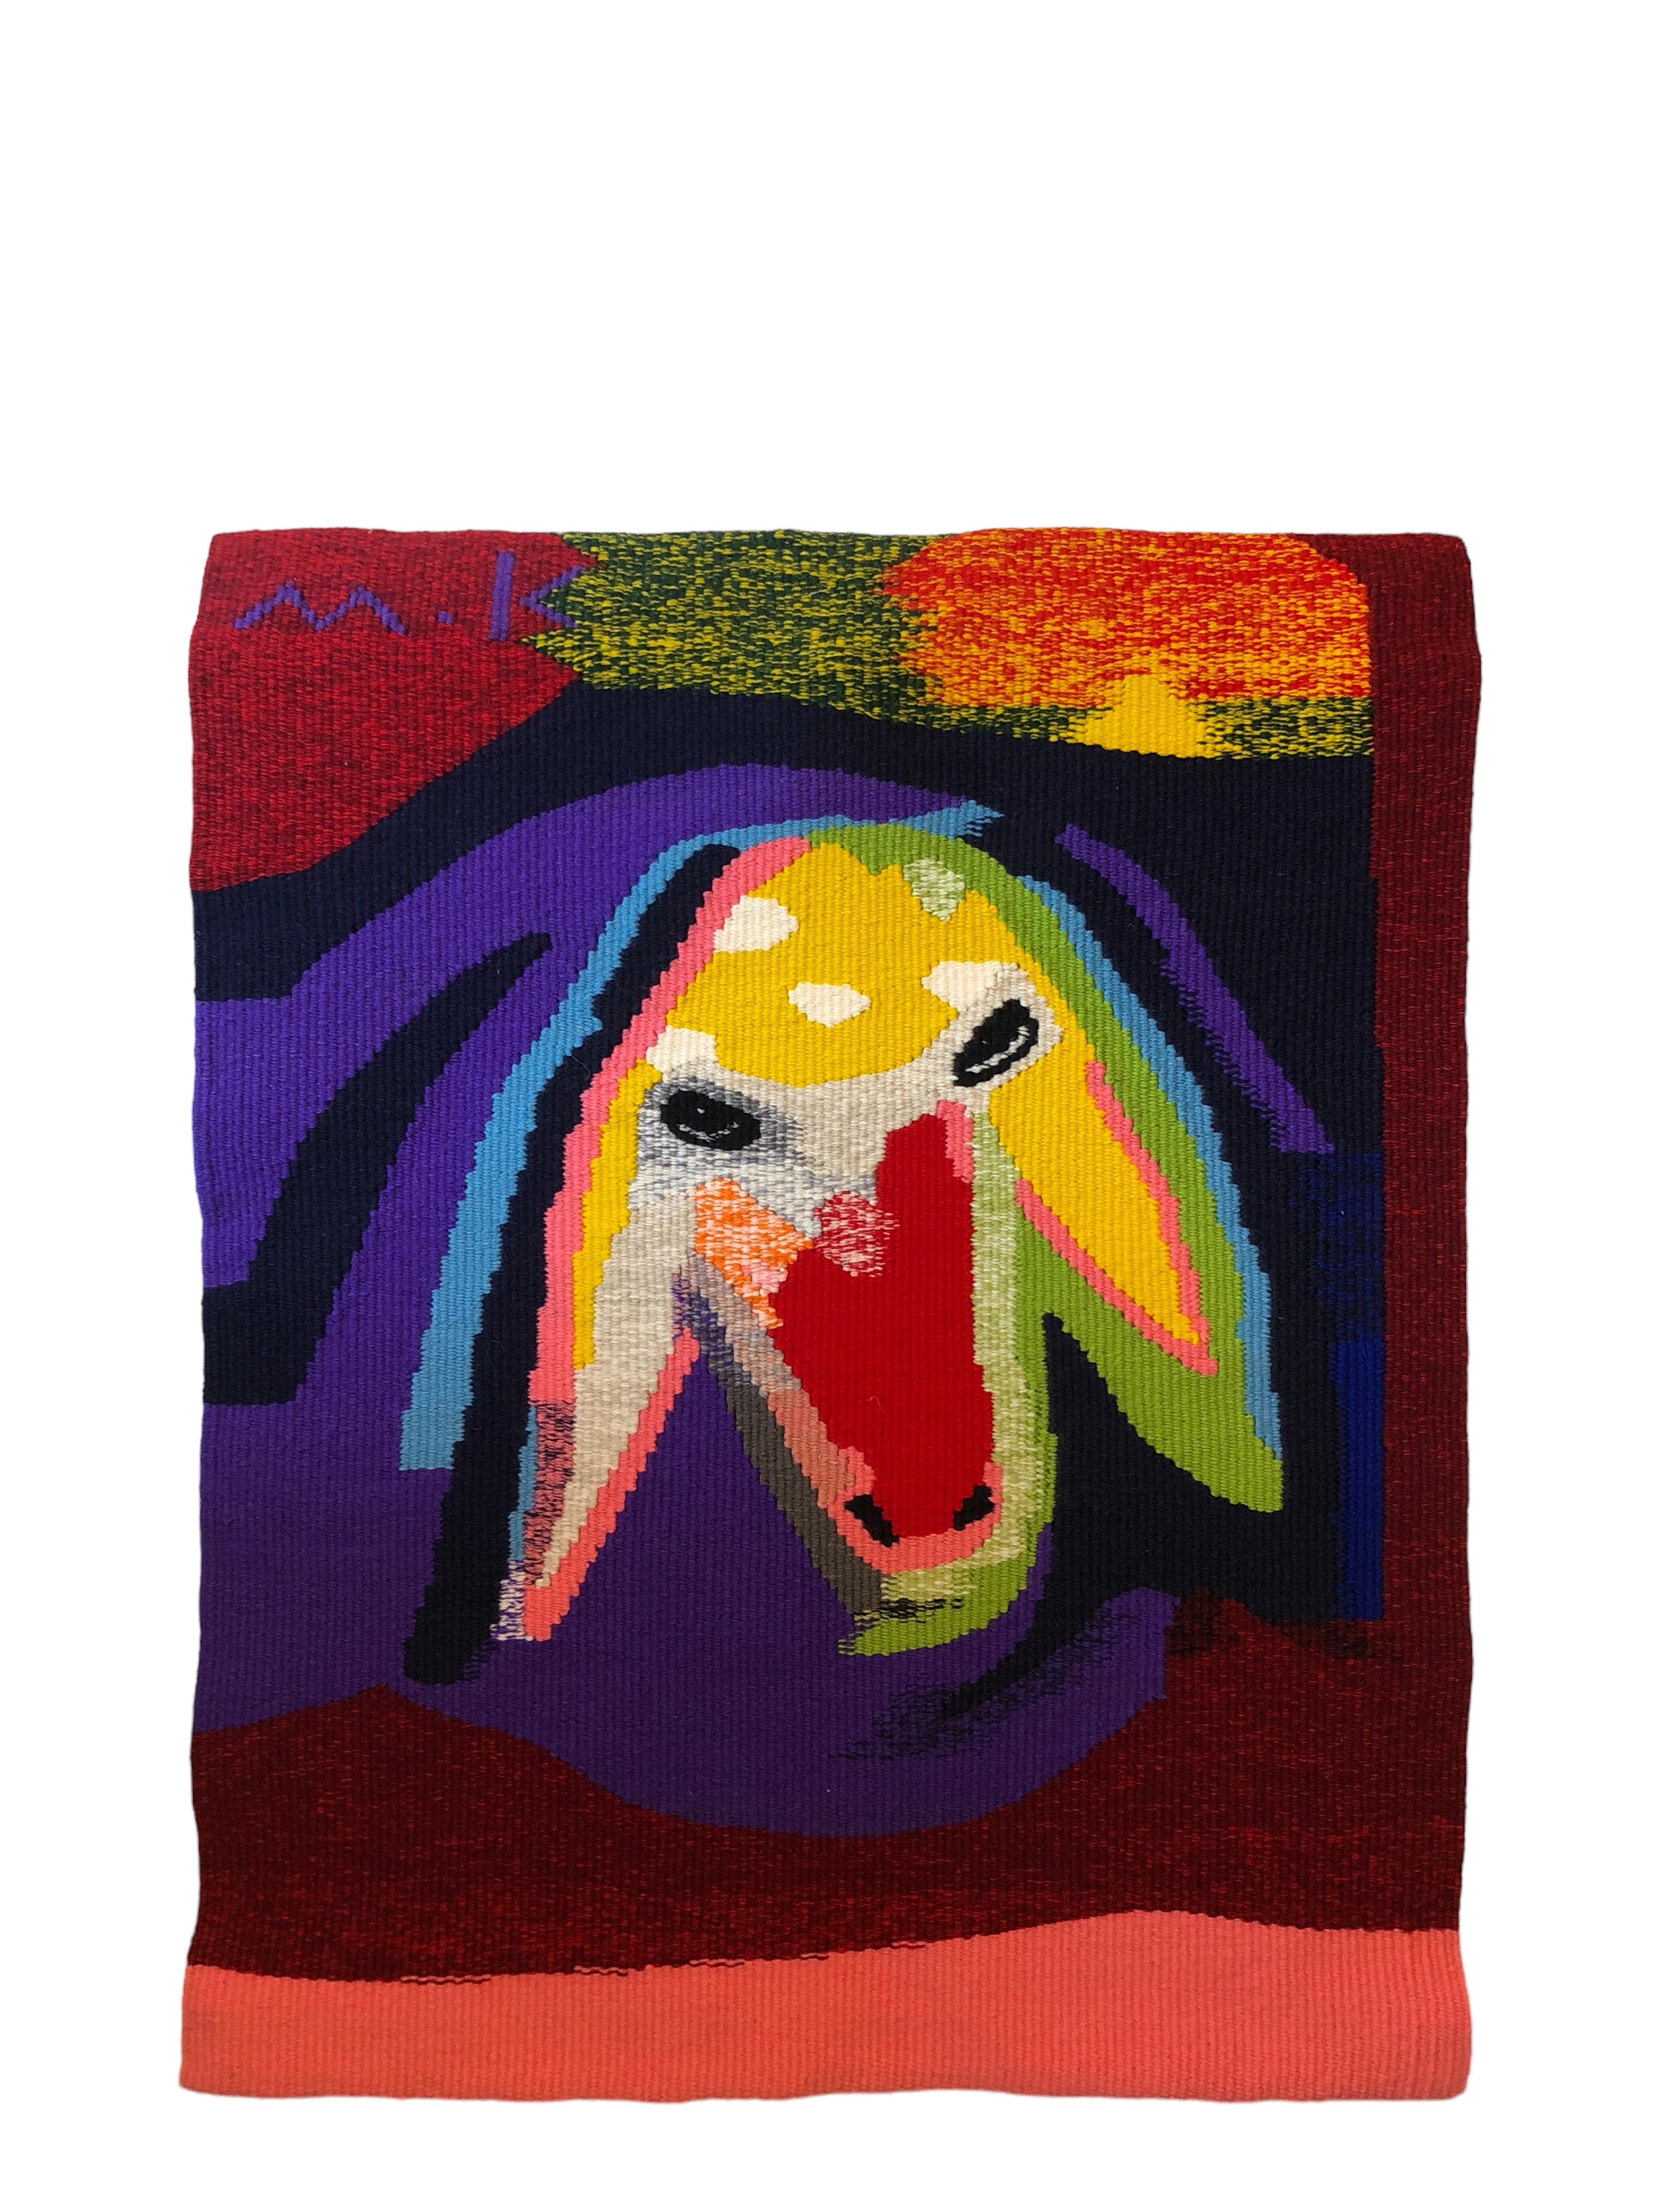  Israeli Hand Woven Colorful Wool Tapestry Weaving Menashe Kadishman Sheep Head  For Sale 8